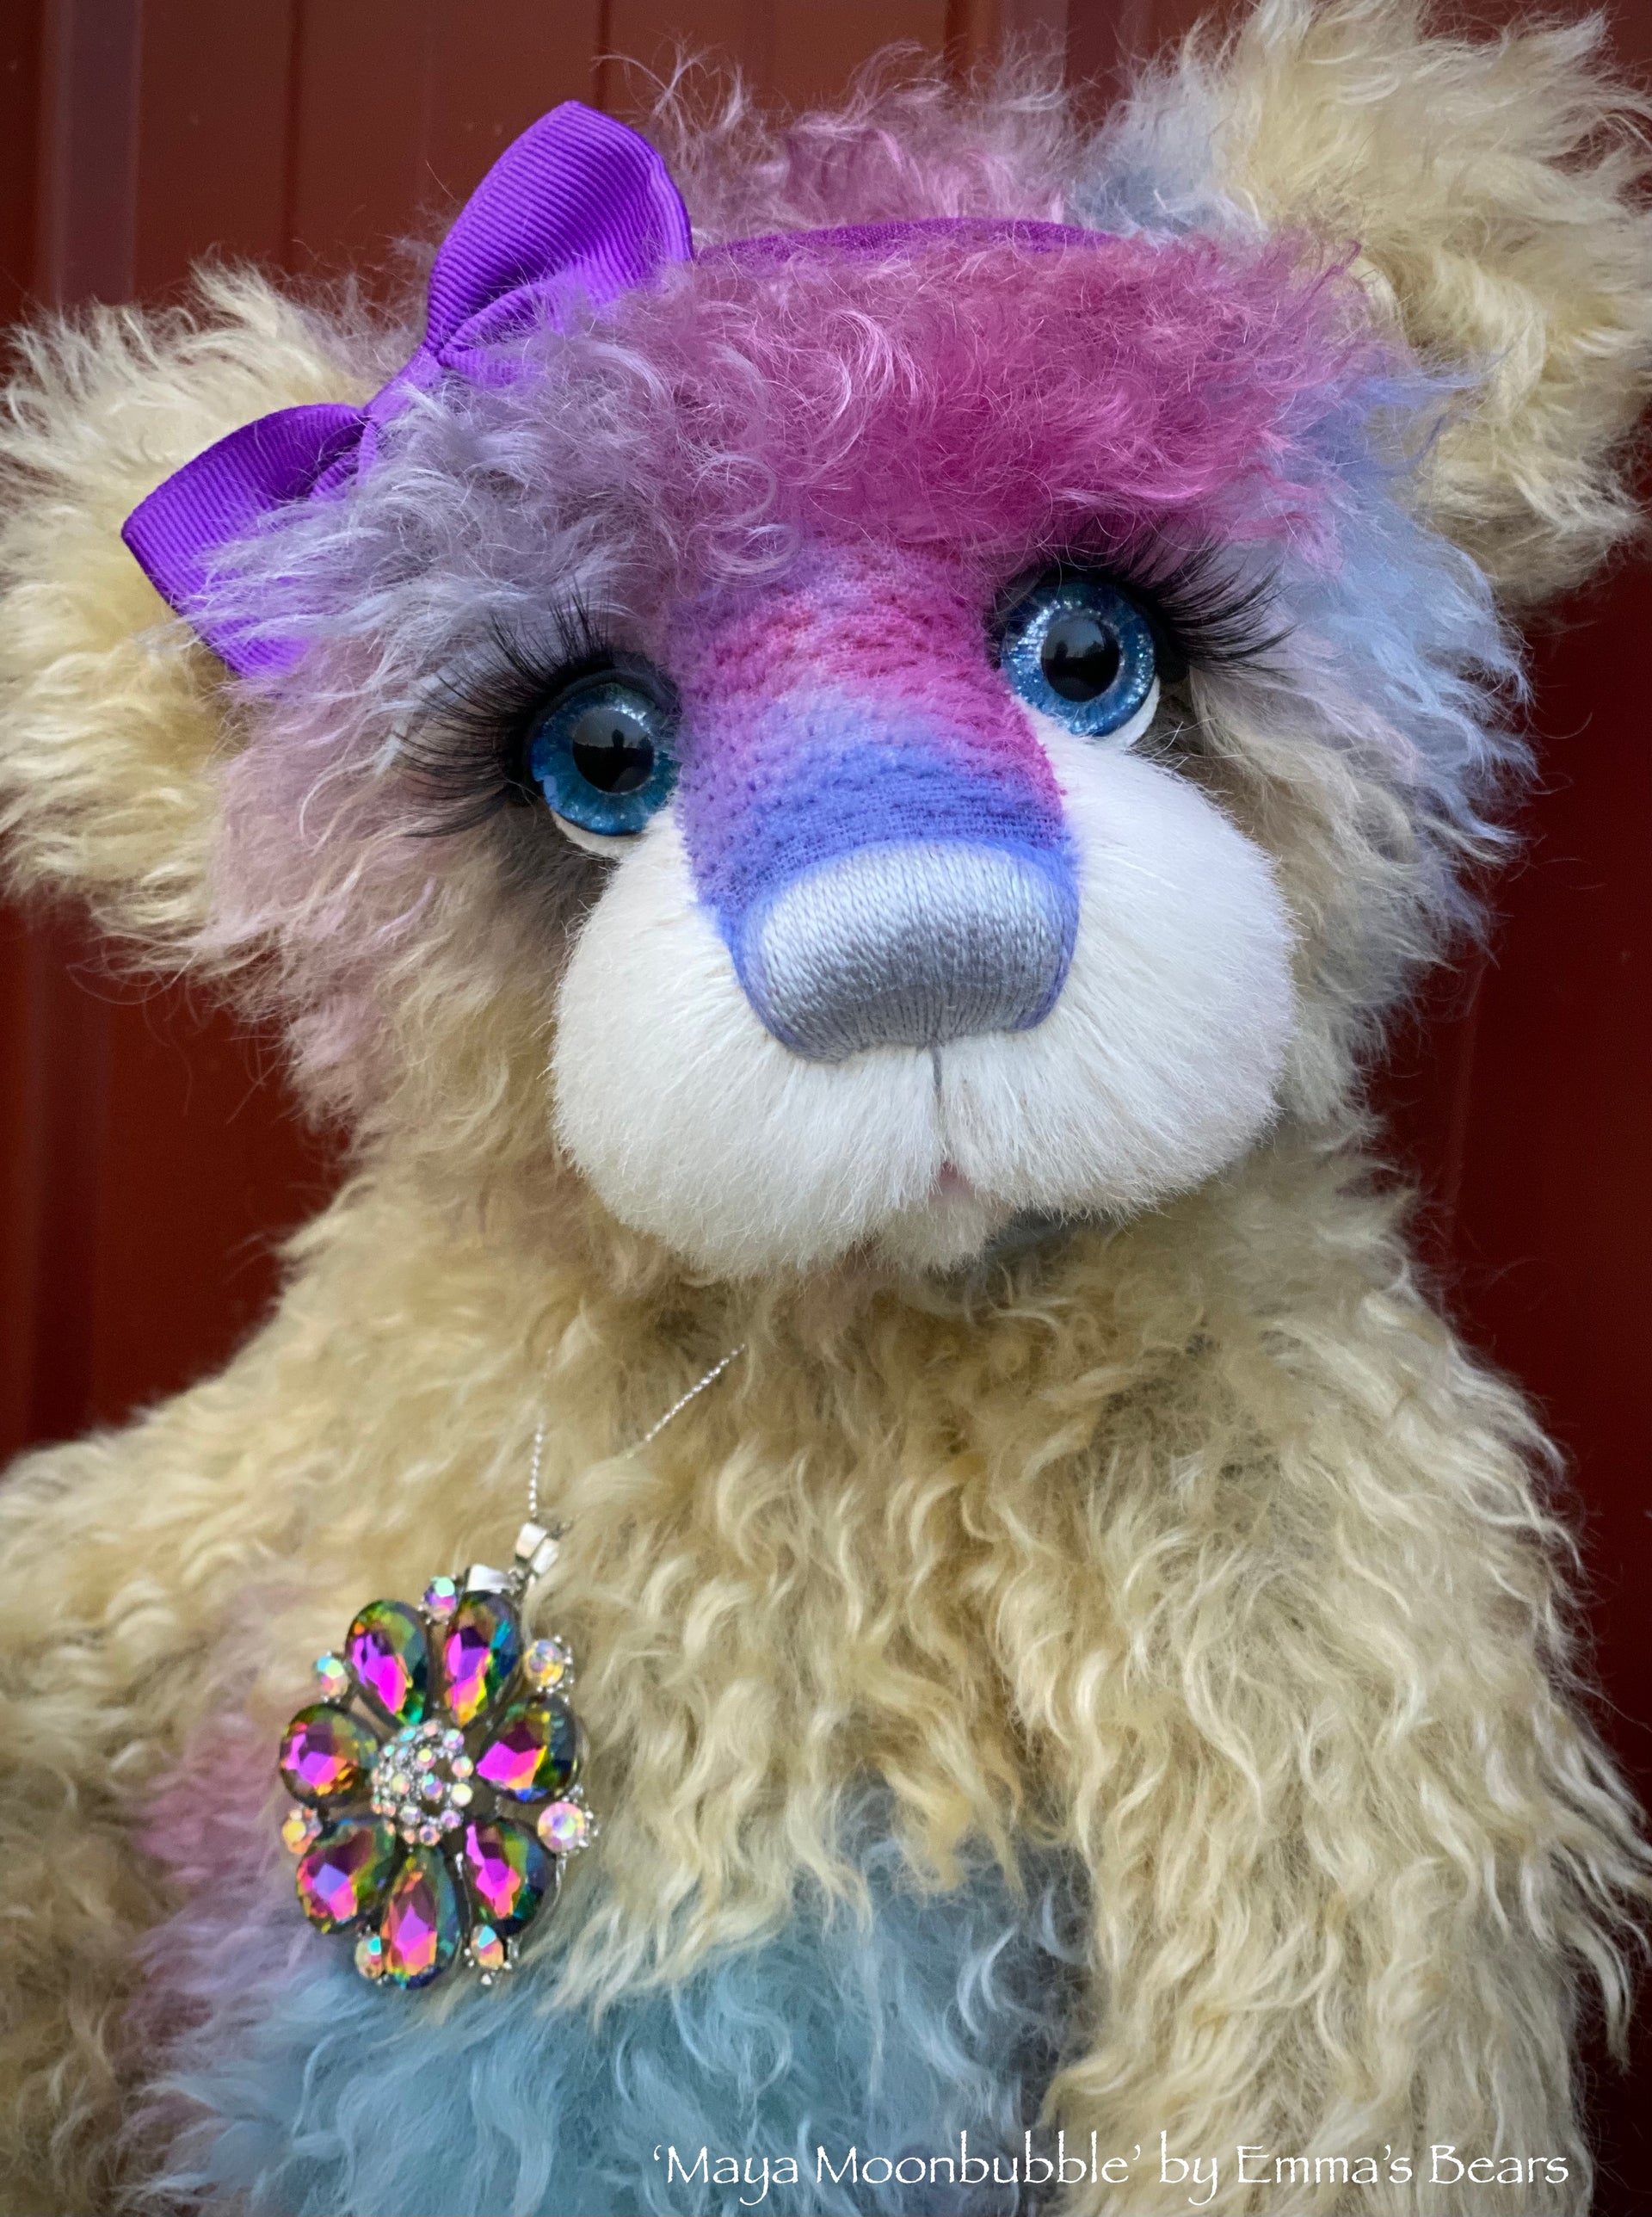 Maya Moonbubble - 18" Hand-Dyed Mohair Artist Bear by Emma's Bears - OOAK